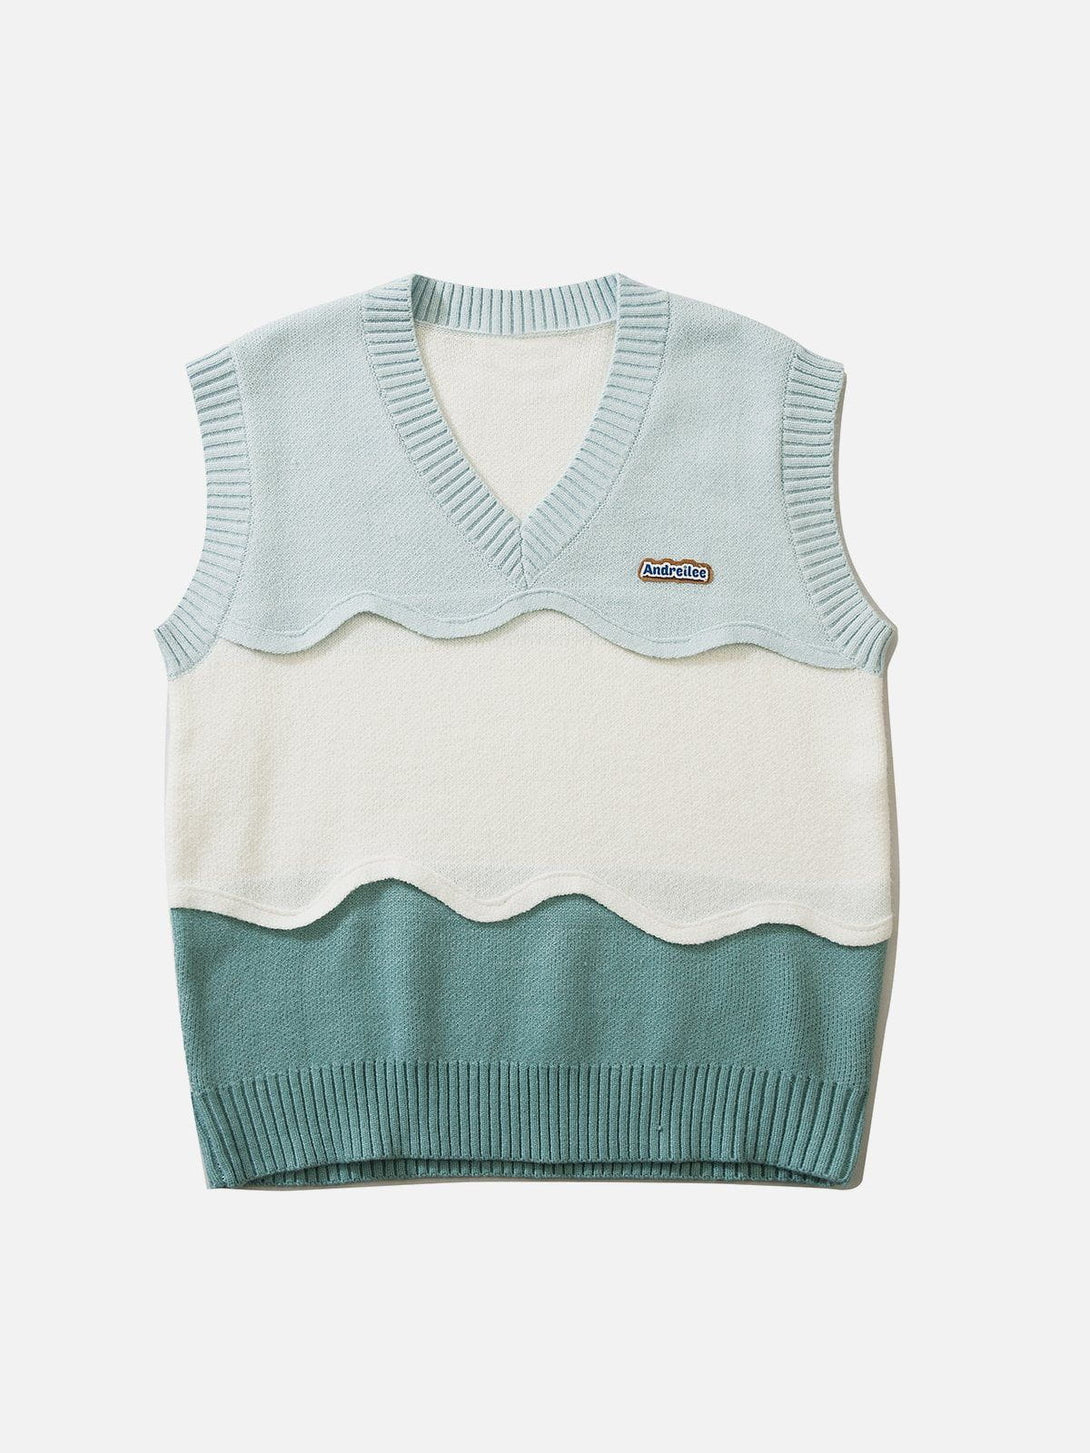 AlanBalen® - Tricolor Stitching Stripes Sweater Vest AlanBalen